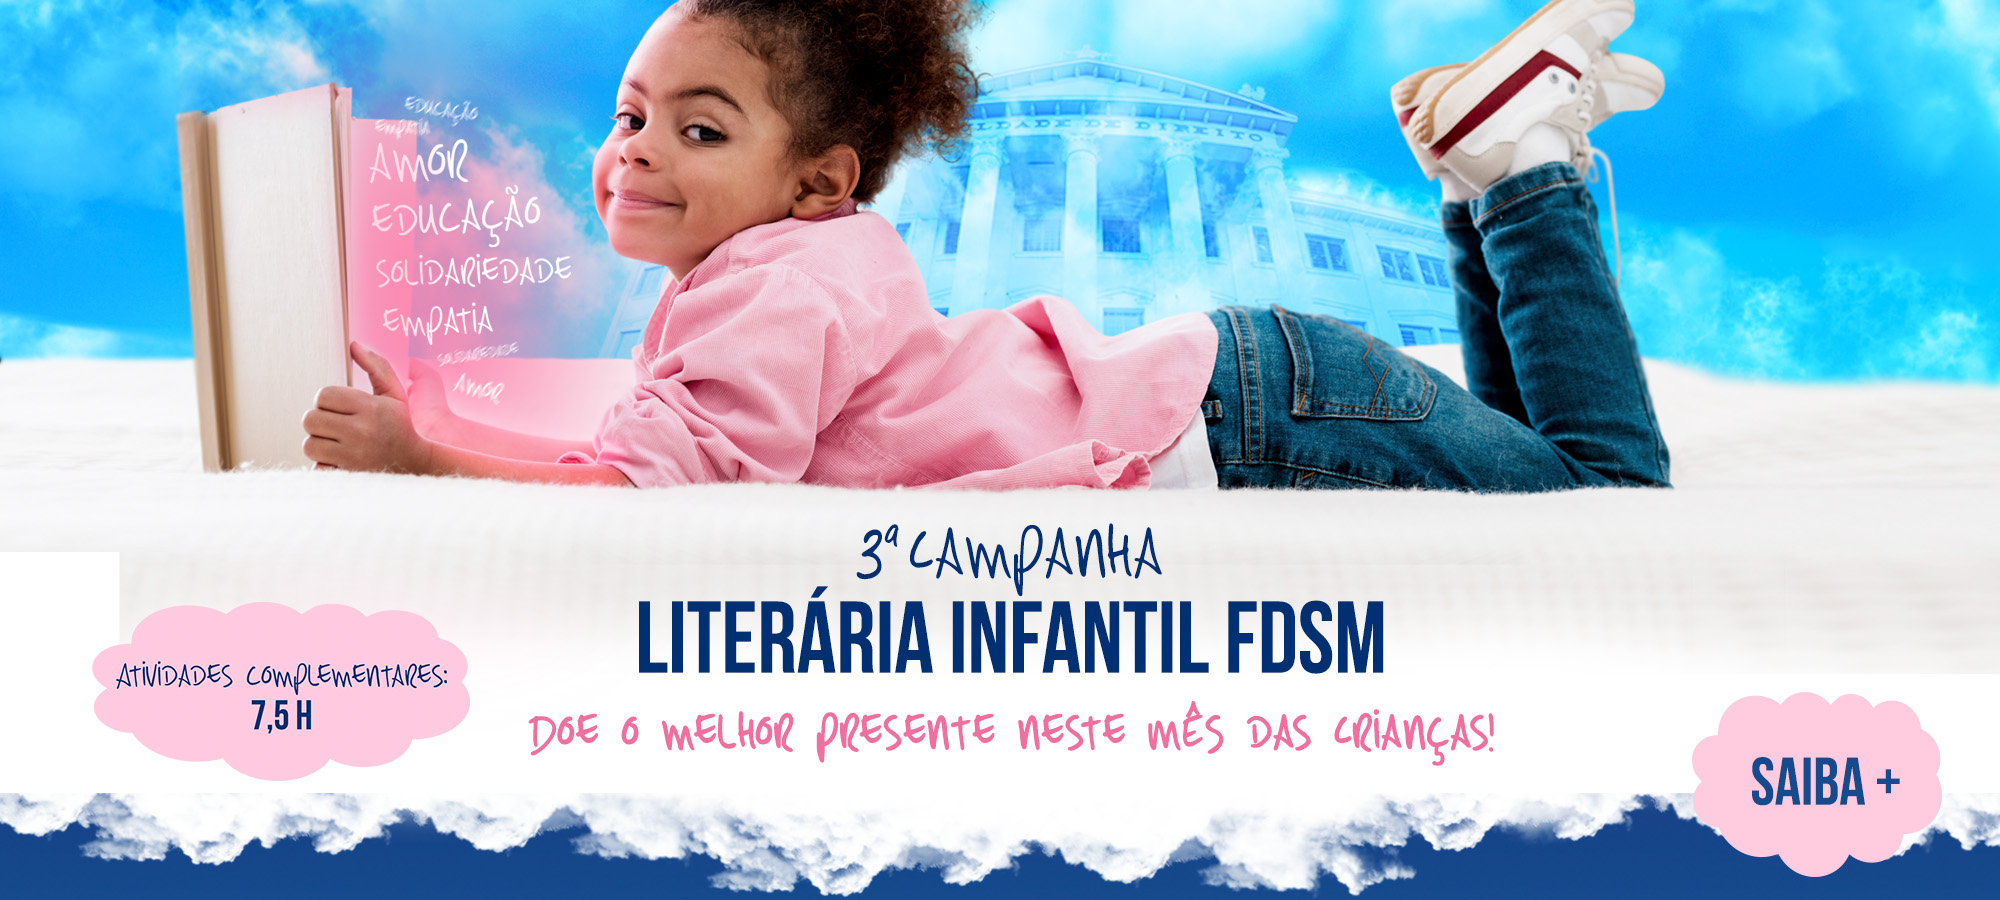 3ª Campanha Literária Infantil FDSM